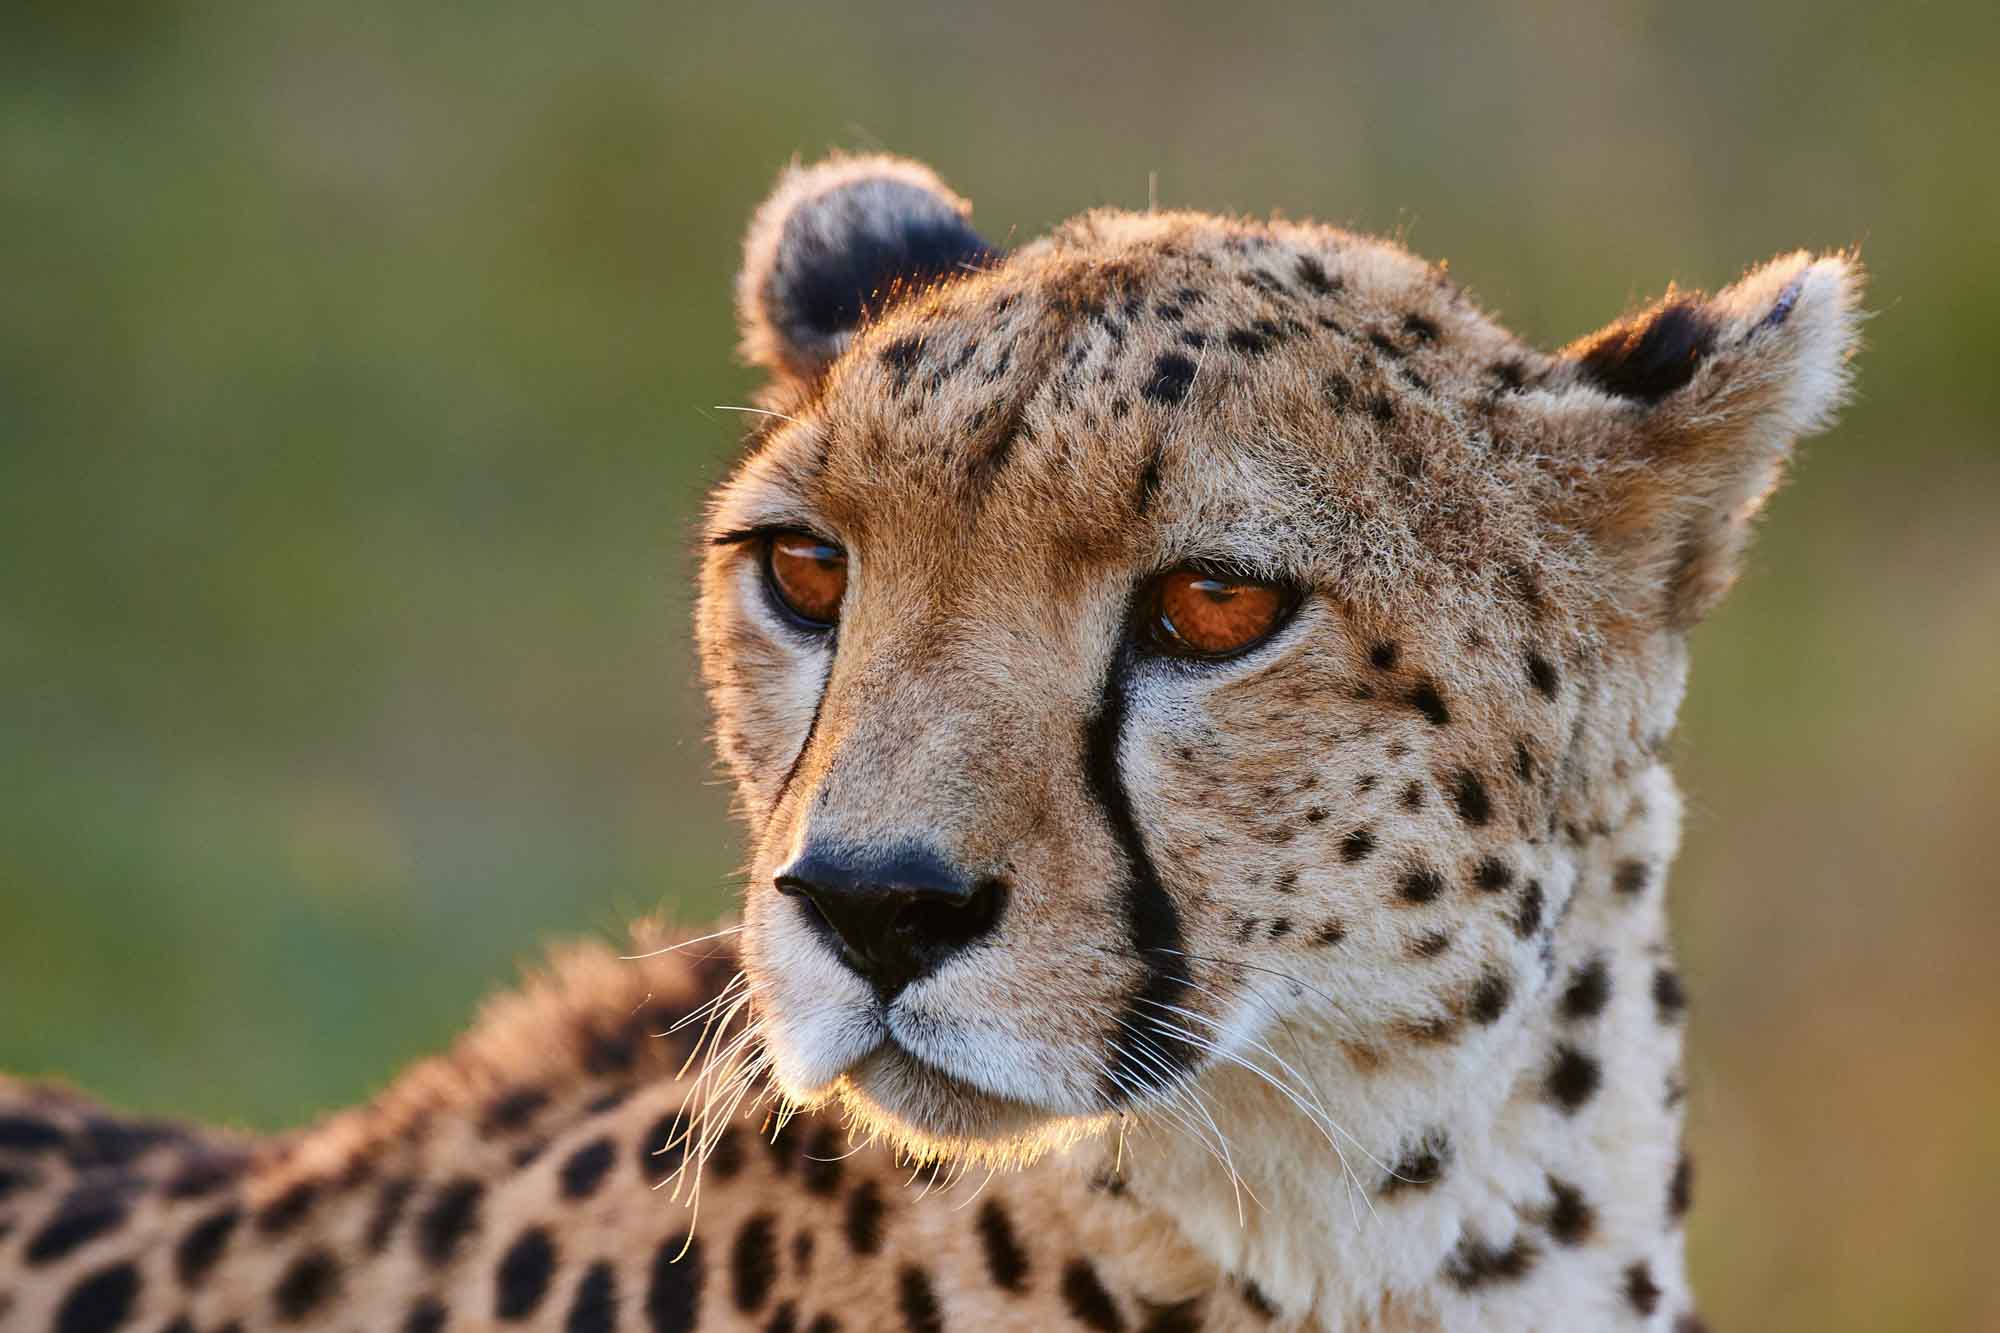 Cheetah (Acinonyx Jubatus) - Lifestyle, Diet, and More - Wildlife Explained